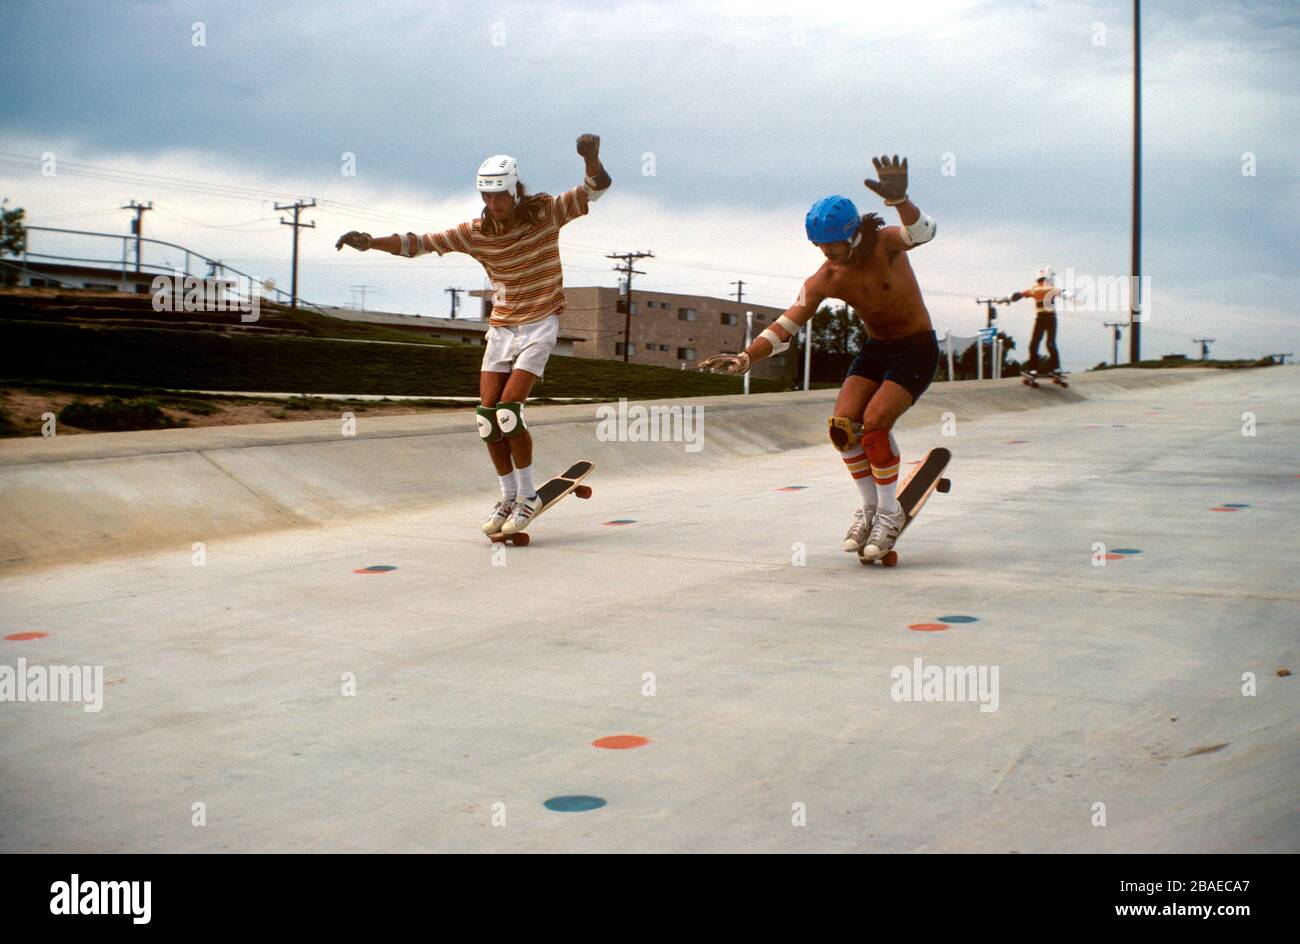 Synchronized skateboarding action. Stock Photo